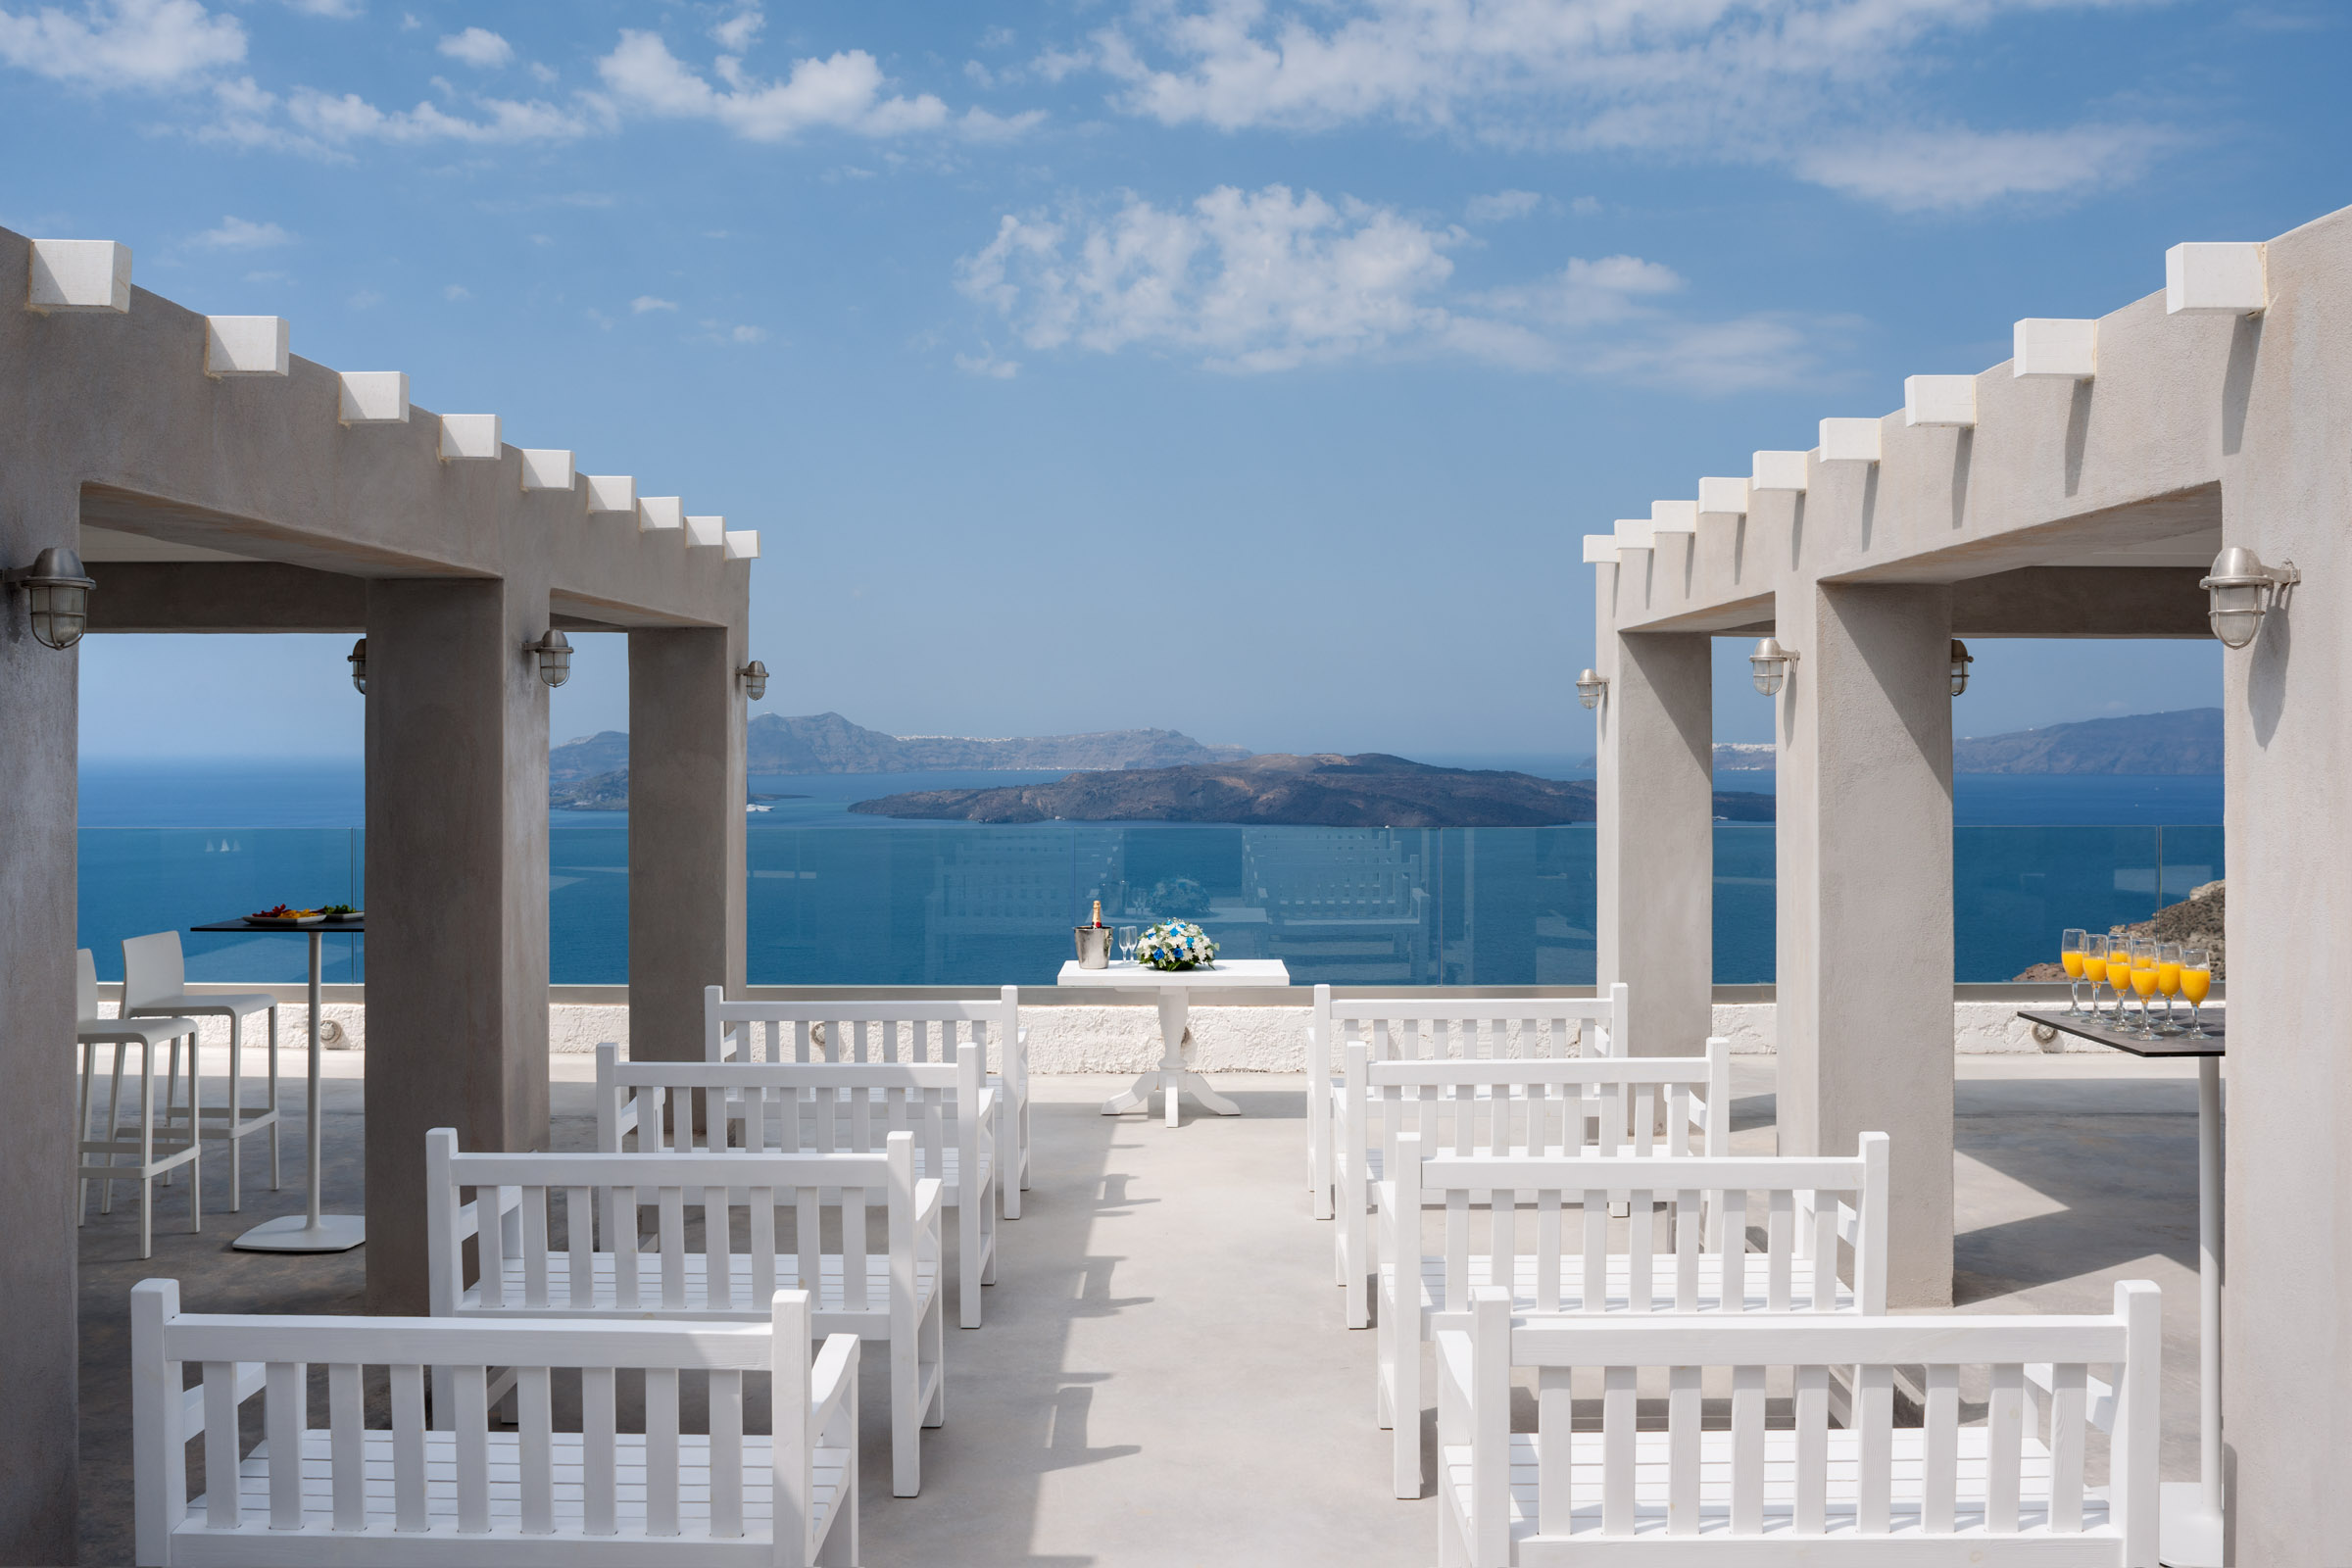 Book your wedding day in Calderas Dolphin Suites 